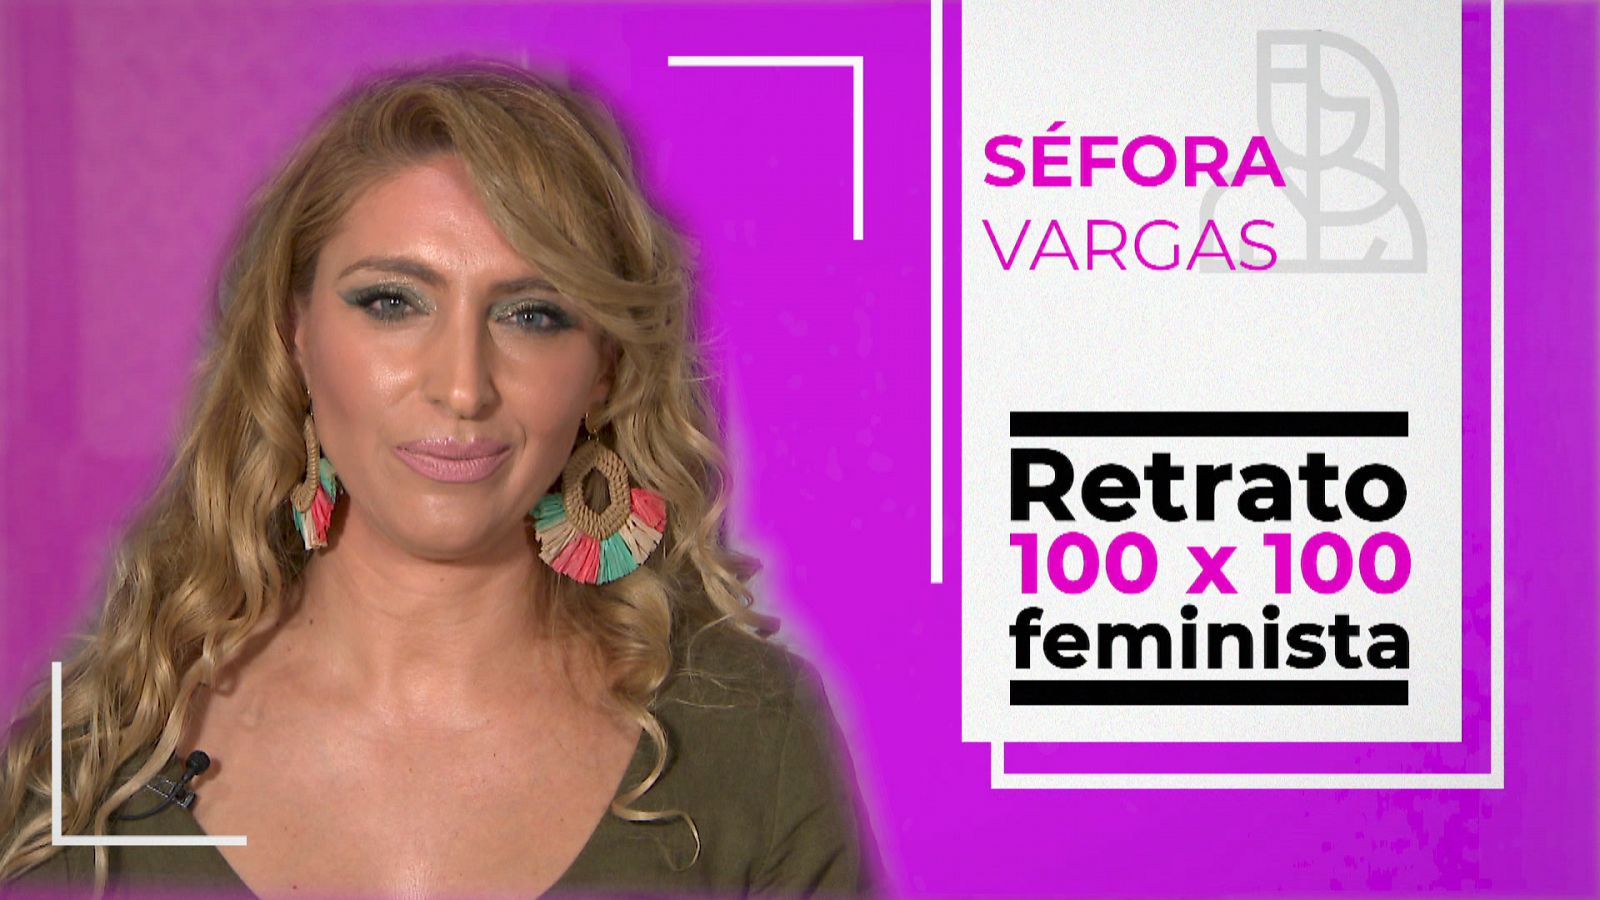 Retrato 100x100 feminista: Séfora Vargas